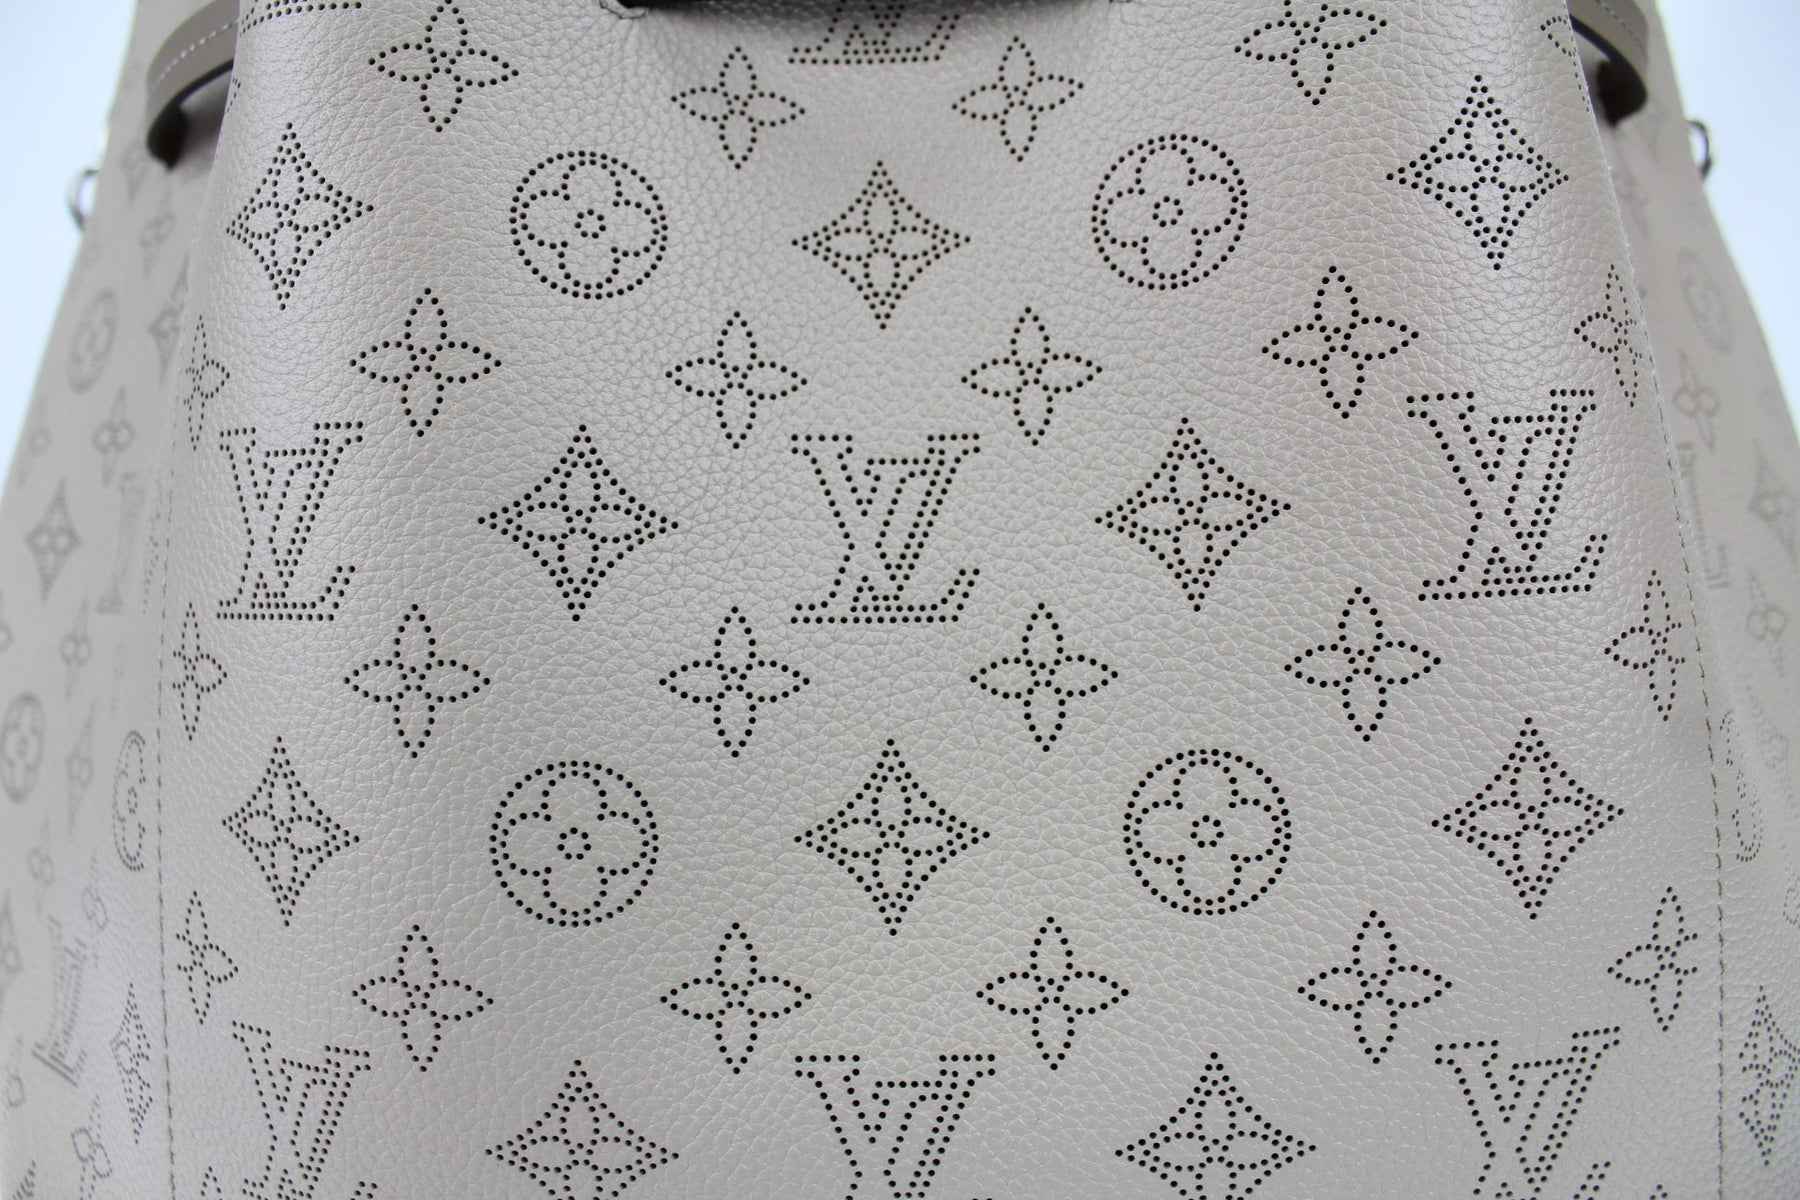 Girolata leather handbag Louis Vuitton Black in Leather - 25073961